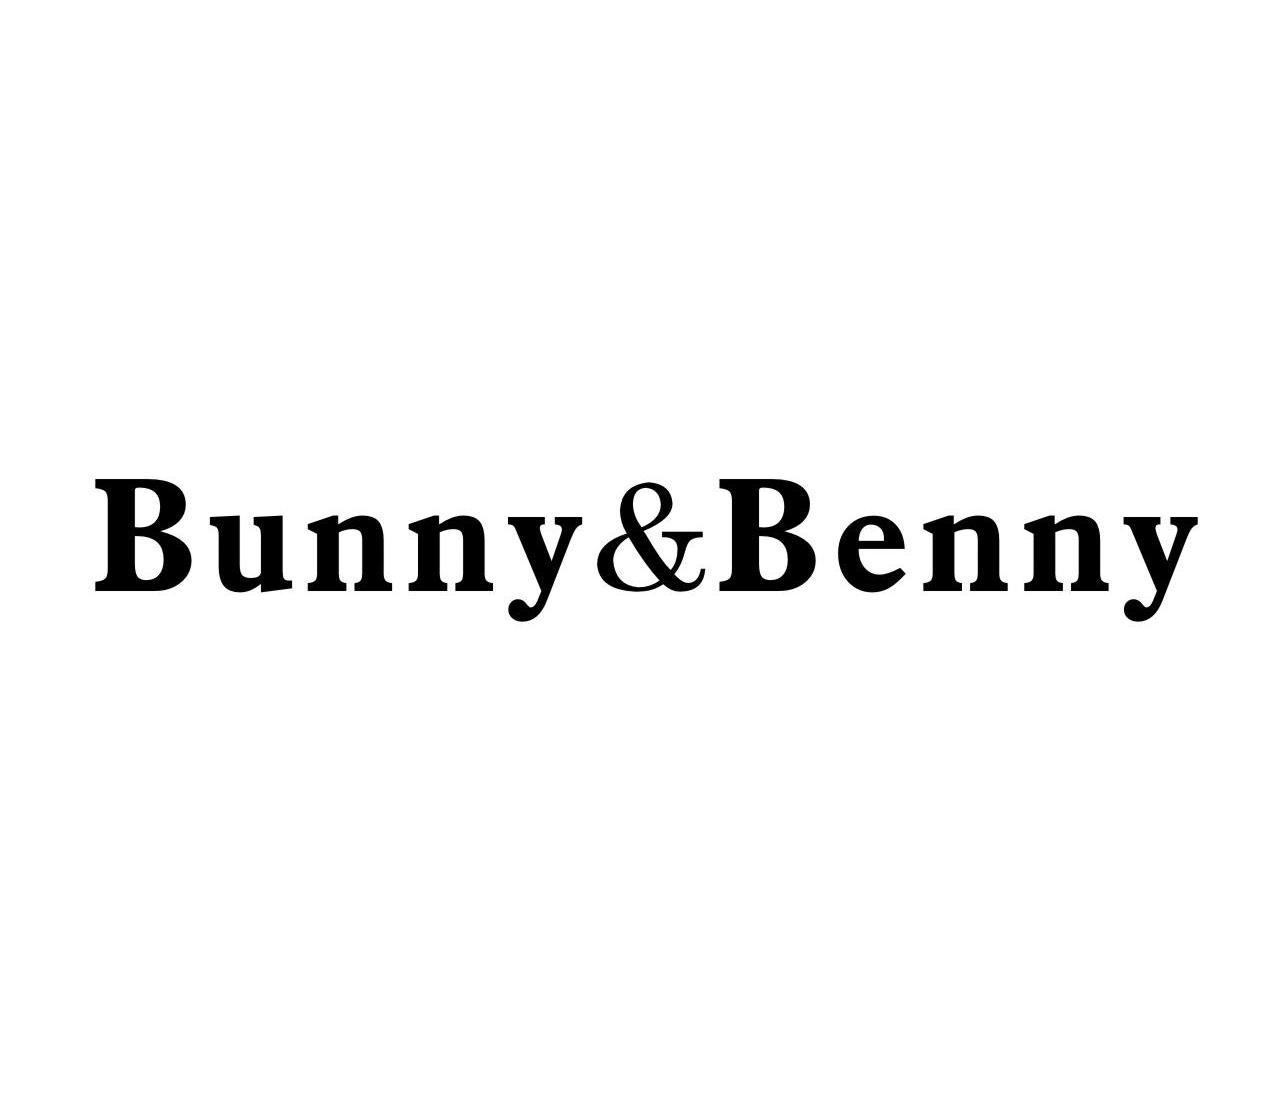 BUNNY&BENNY 商标公告